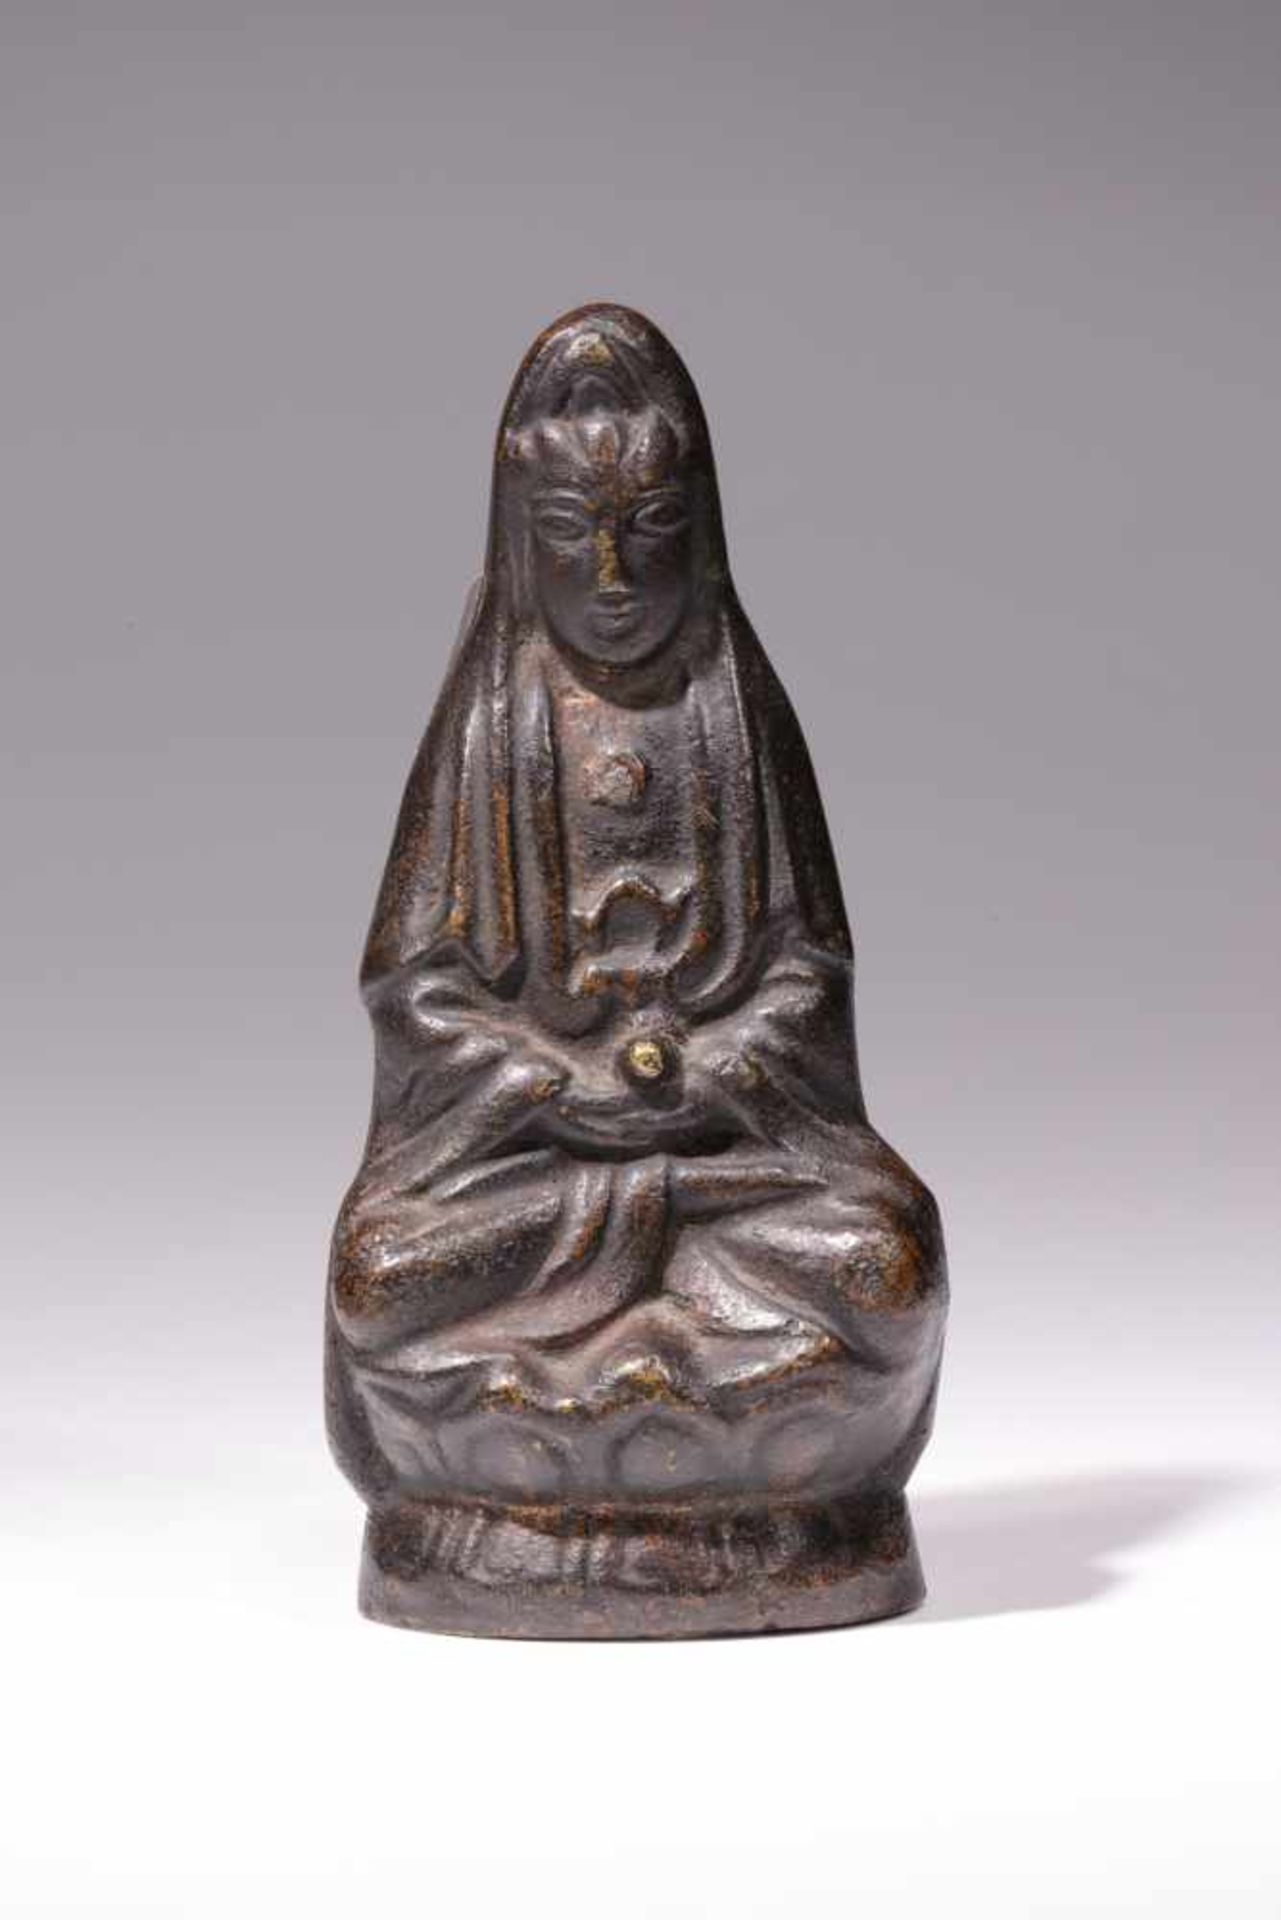 GUANYINbronze,China, 19th century,Size: 10 cmA simply designed sitting Guanyin statue on lotus